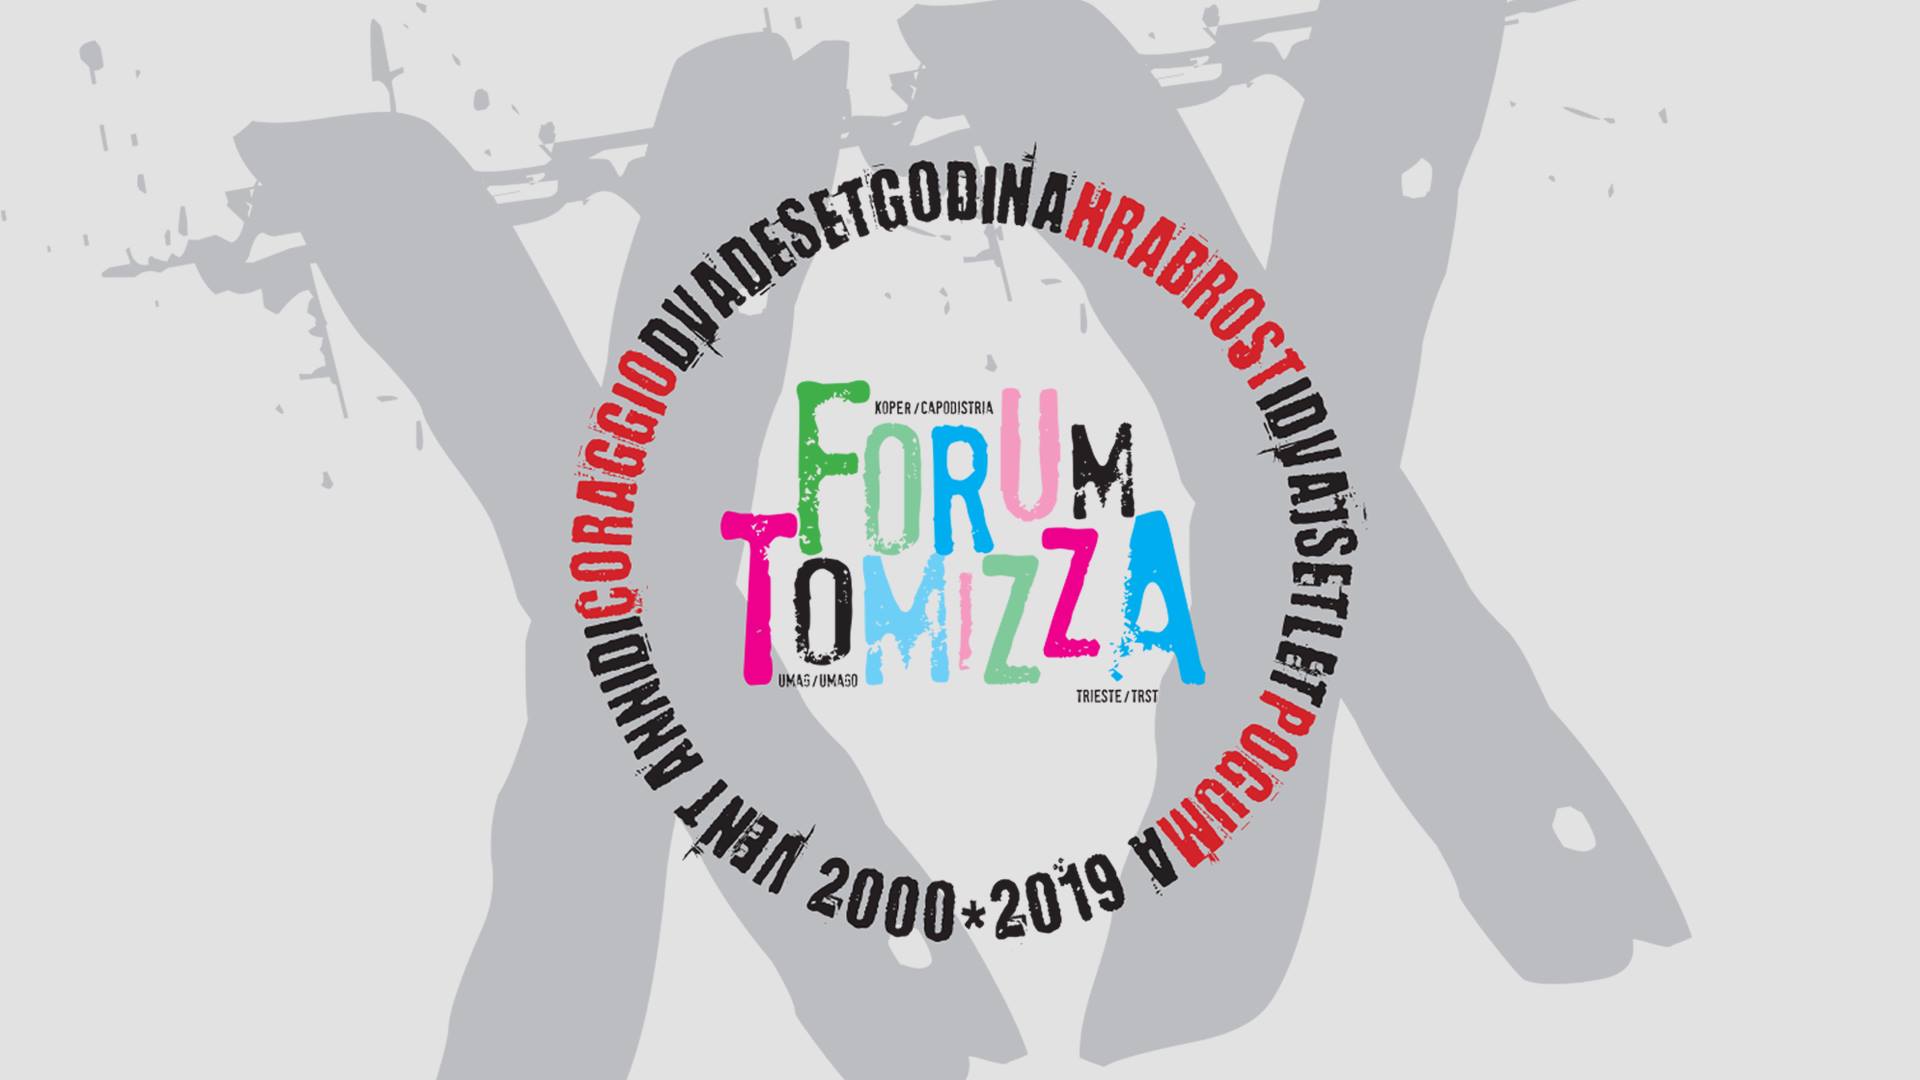 Forum Tomizza 2019: programma